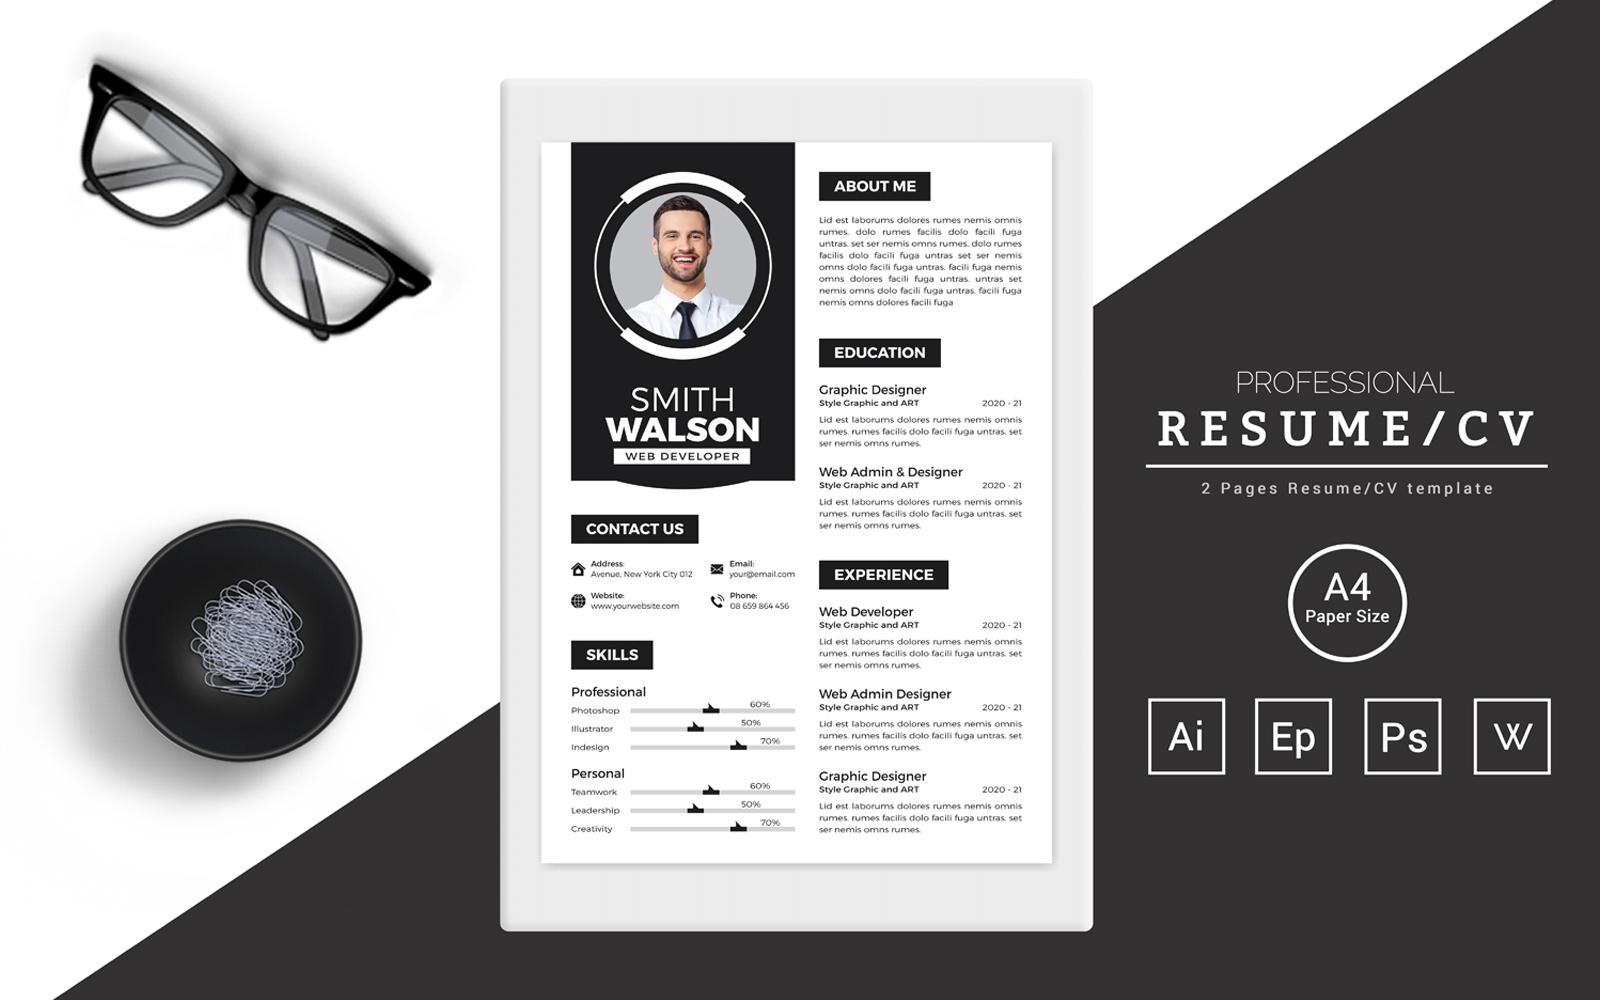 Smith Walson – Resume Design for a Web Developer